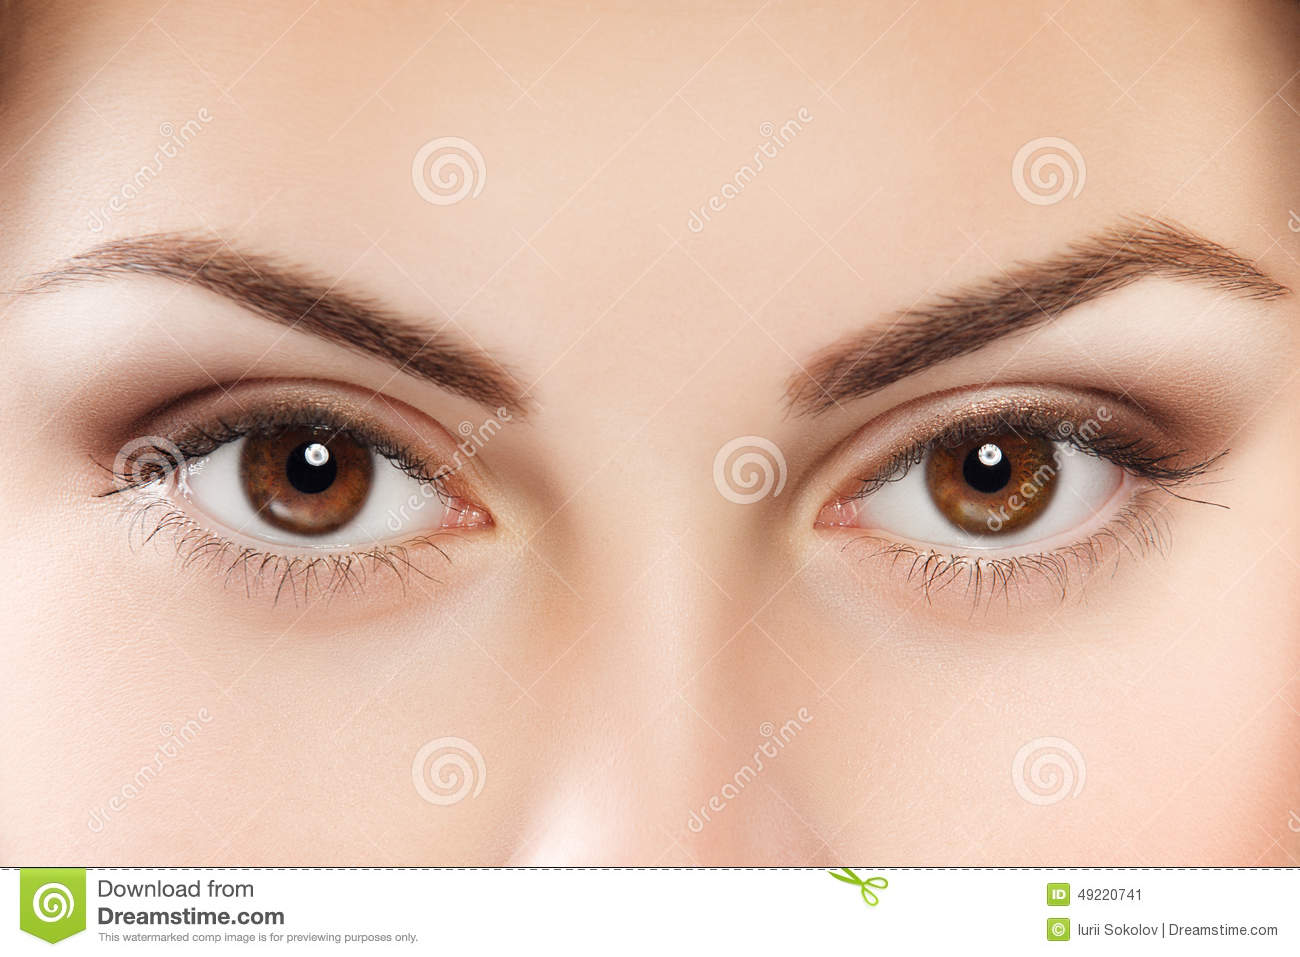 brown-eyes-close-up-image-female-49220741.jpg